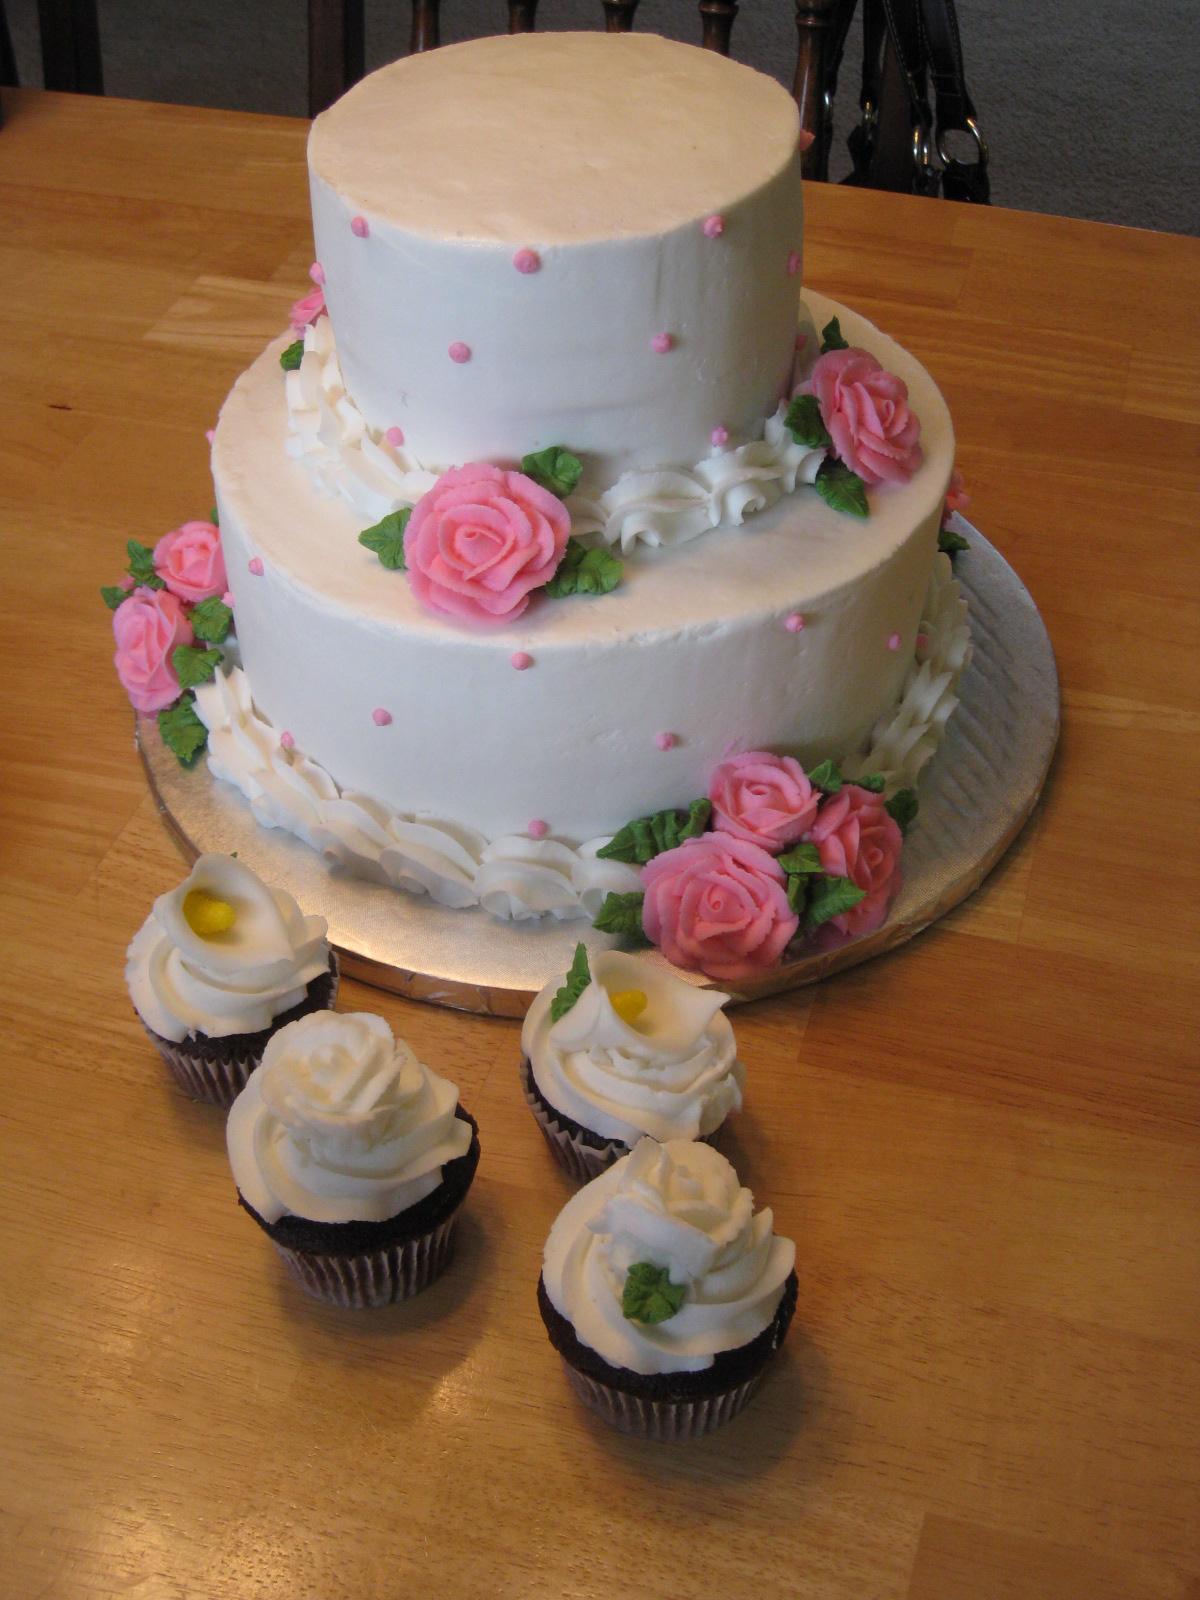 14. Pretty pink wedding cake